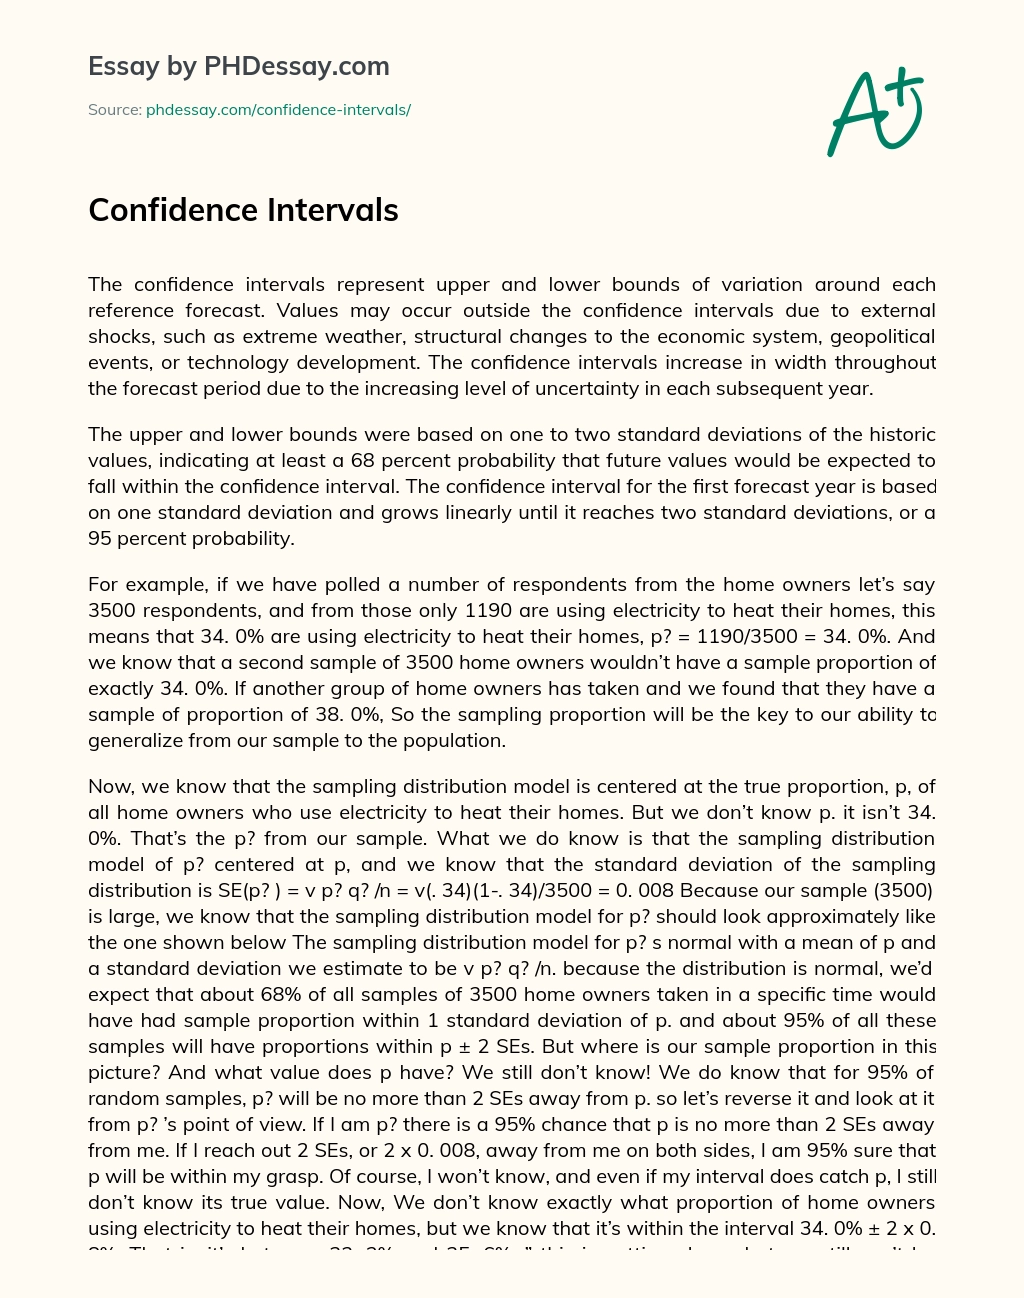 Confidence Intervals essay